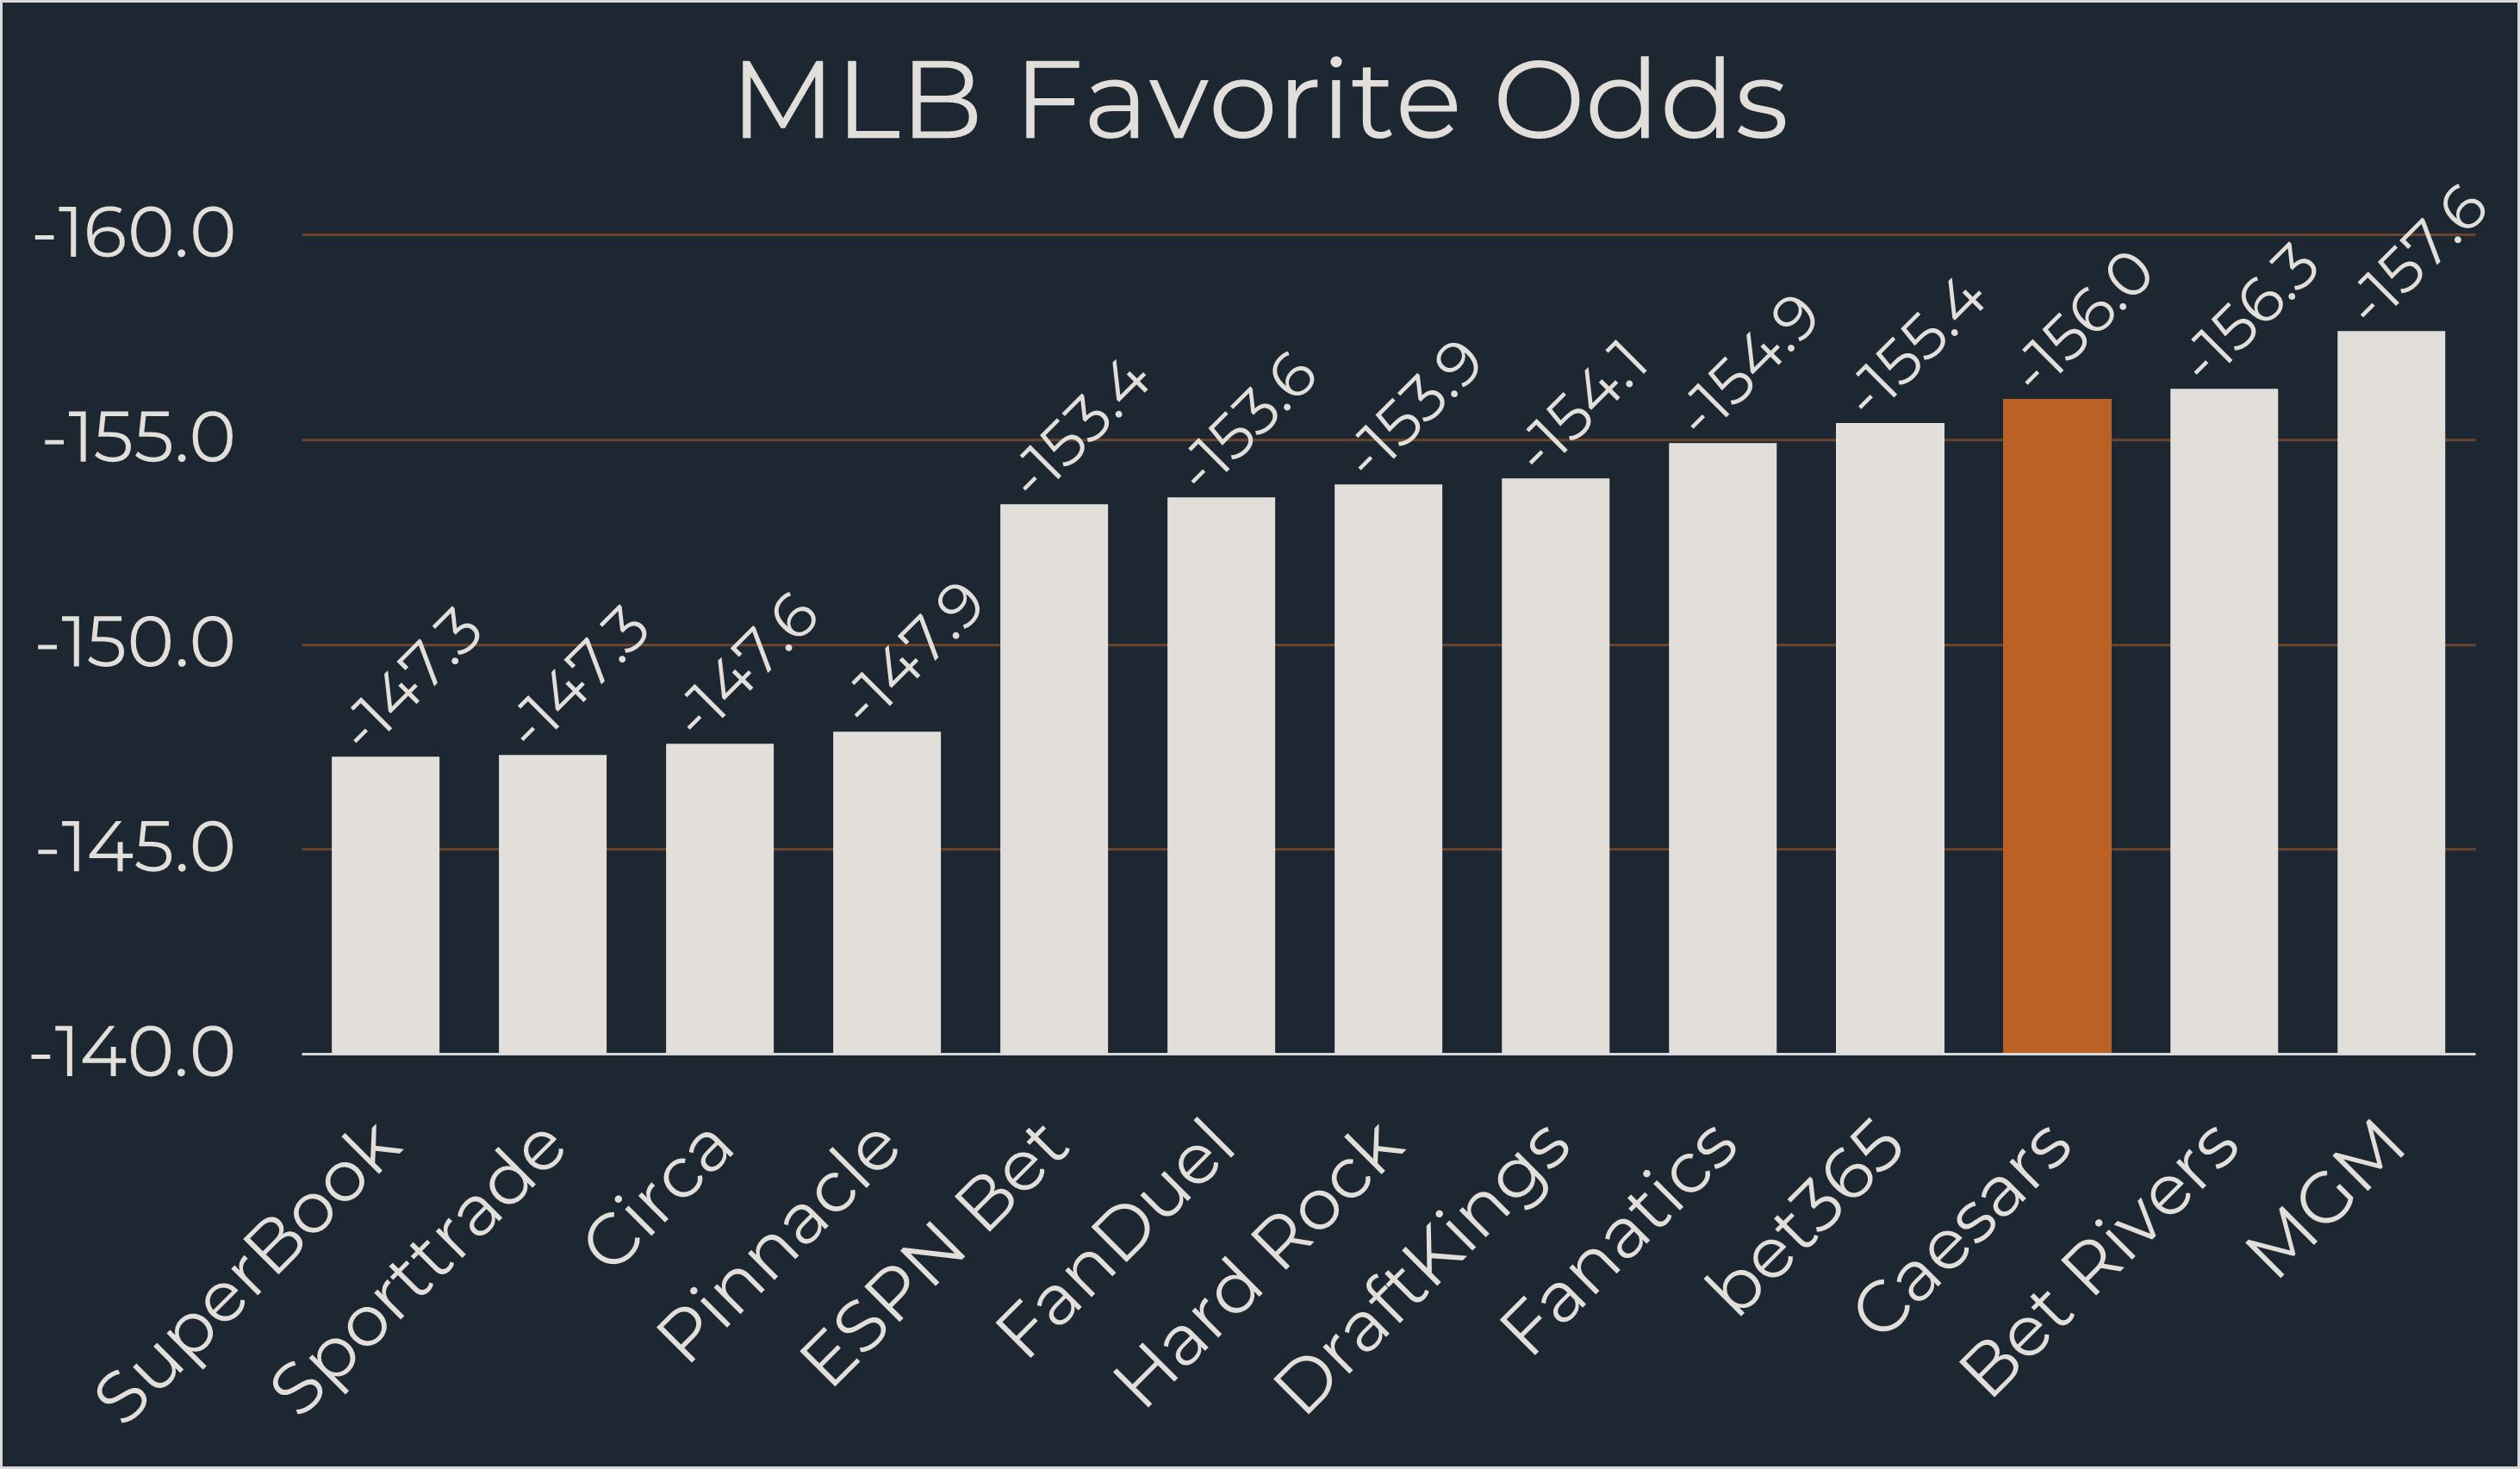 Caesars MLB Odds comparison chart